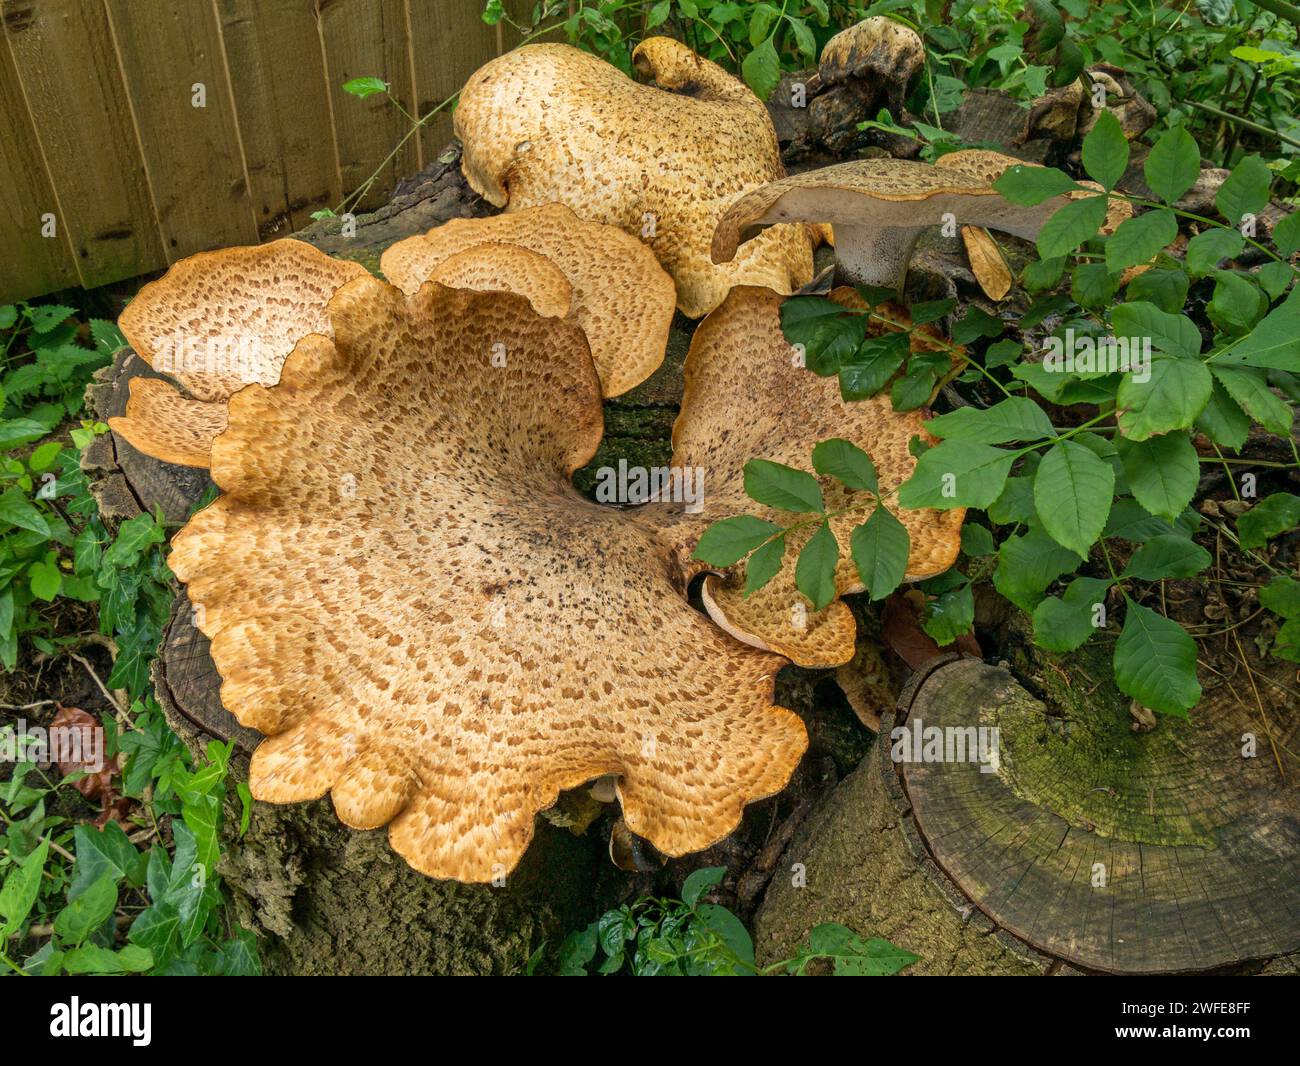 Larch bracket fungus (Dryad's Saddle - Polyporus squamosus?) growing on dead oak tree stump, Leicestershire, England, UK Stock Photo